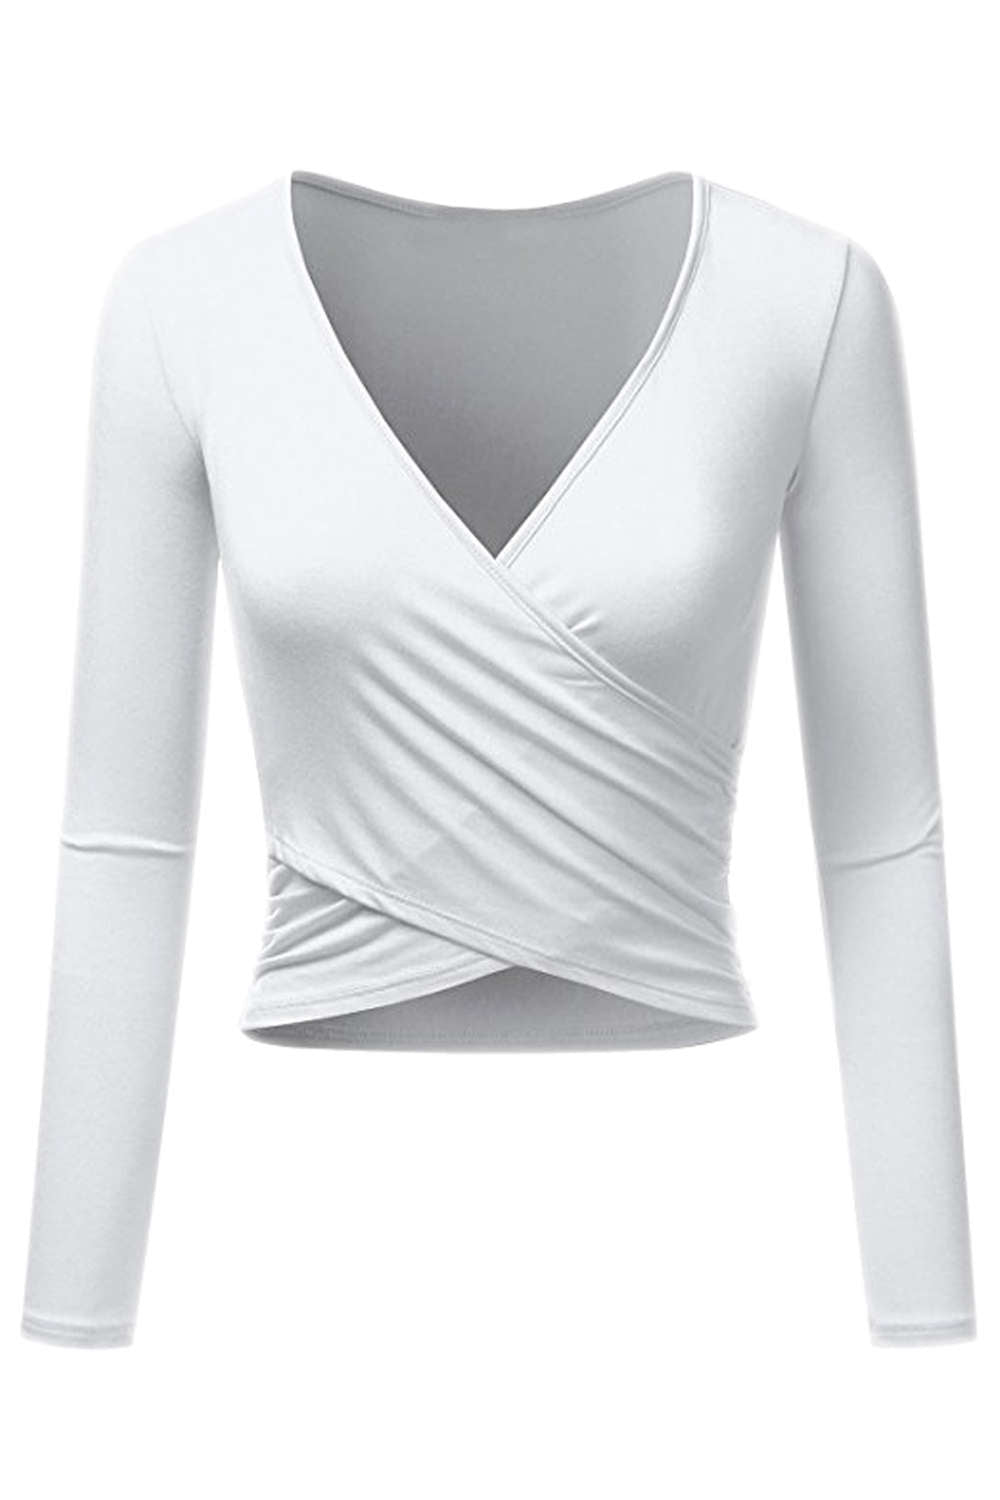 Iyasson Women's V-neck Long Sleeve Wrap Crop Tops